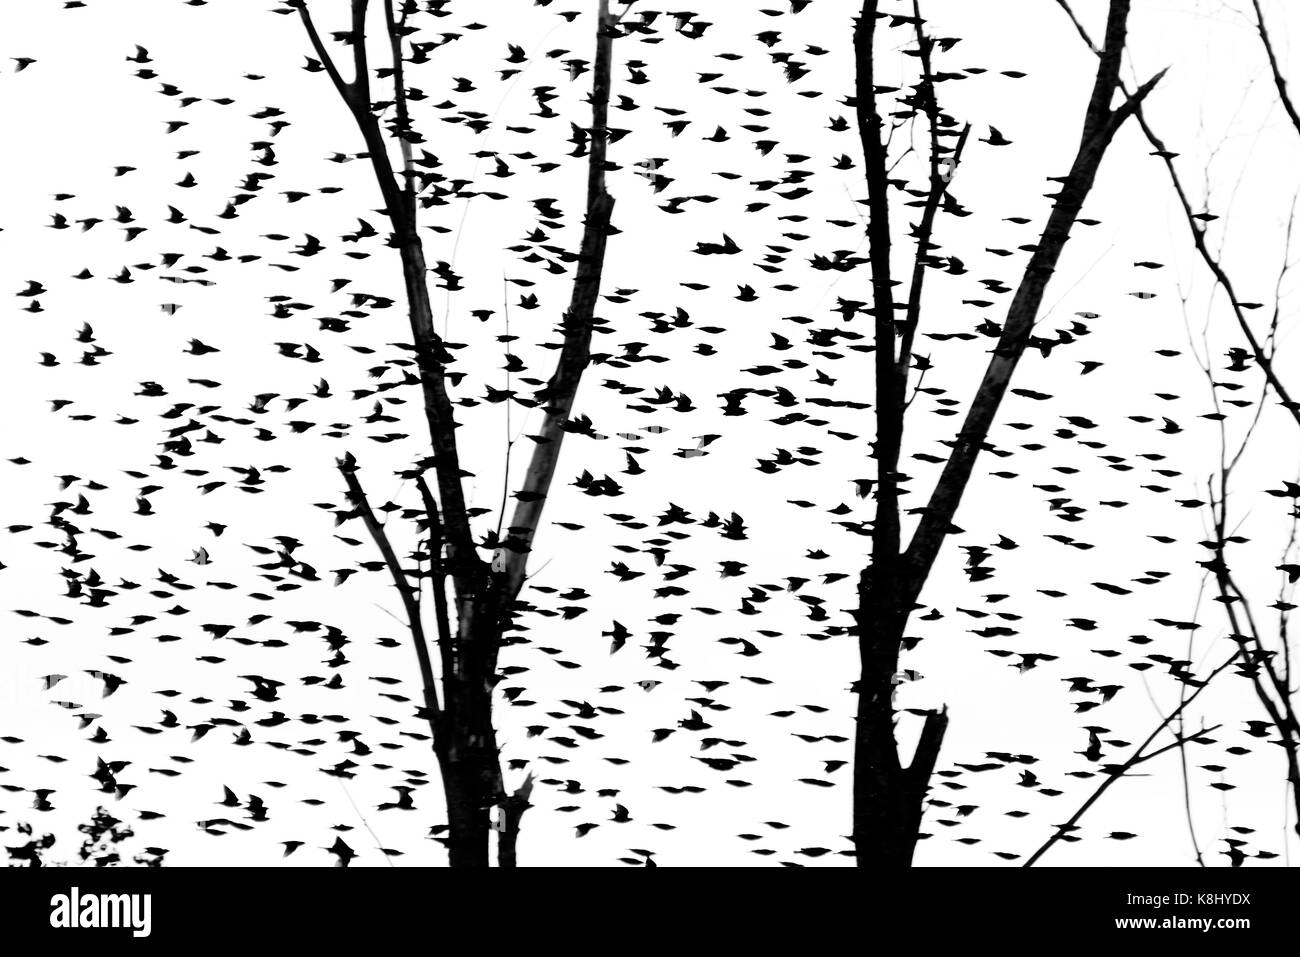 Flock of flying birds Stock Photo